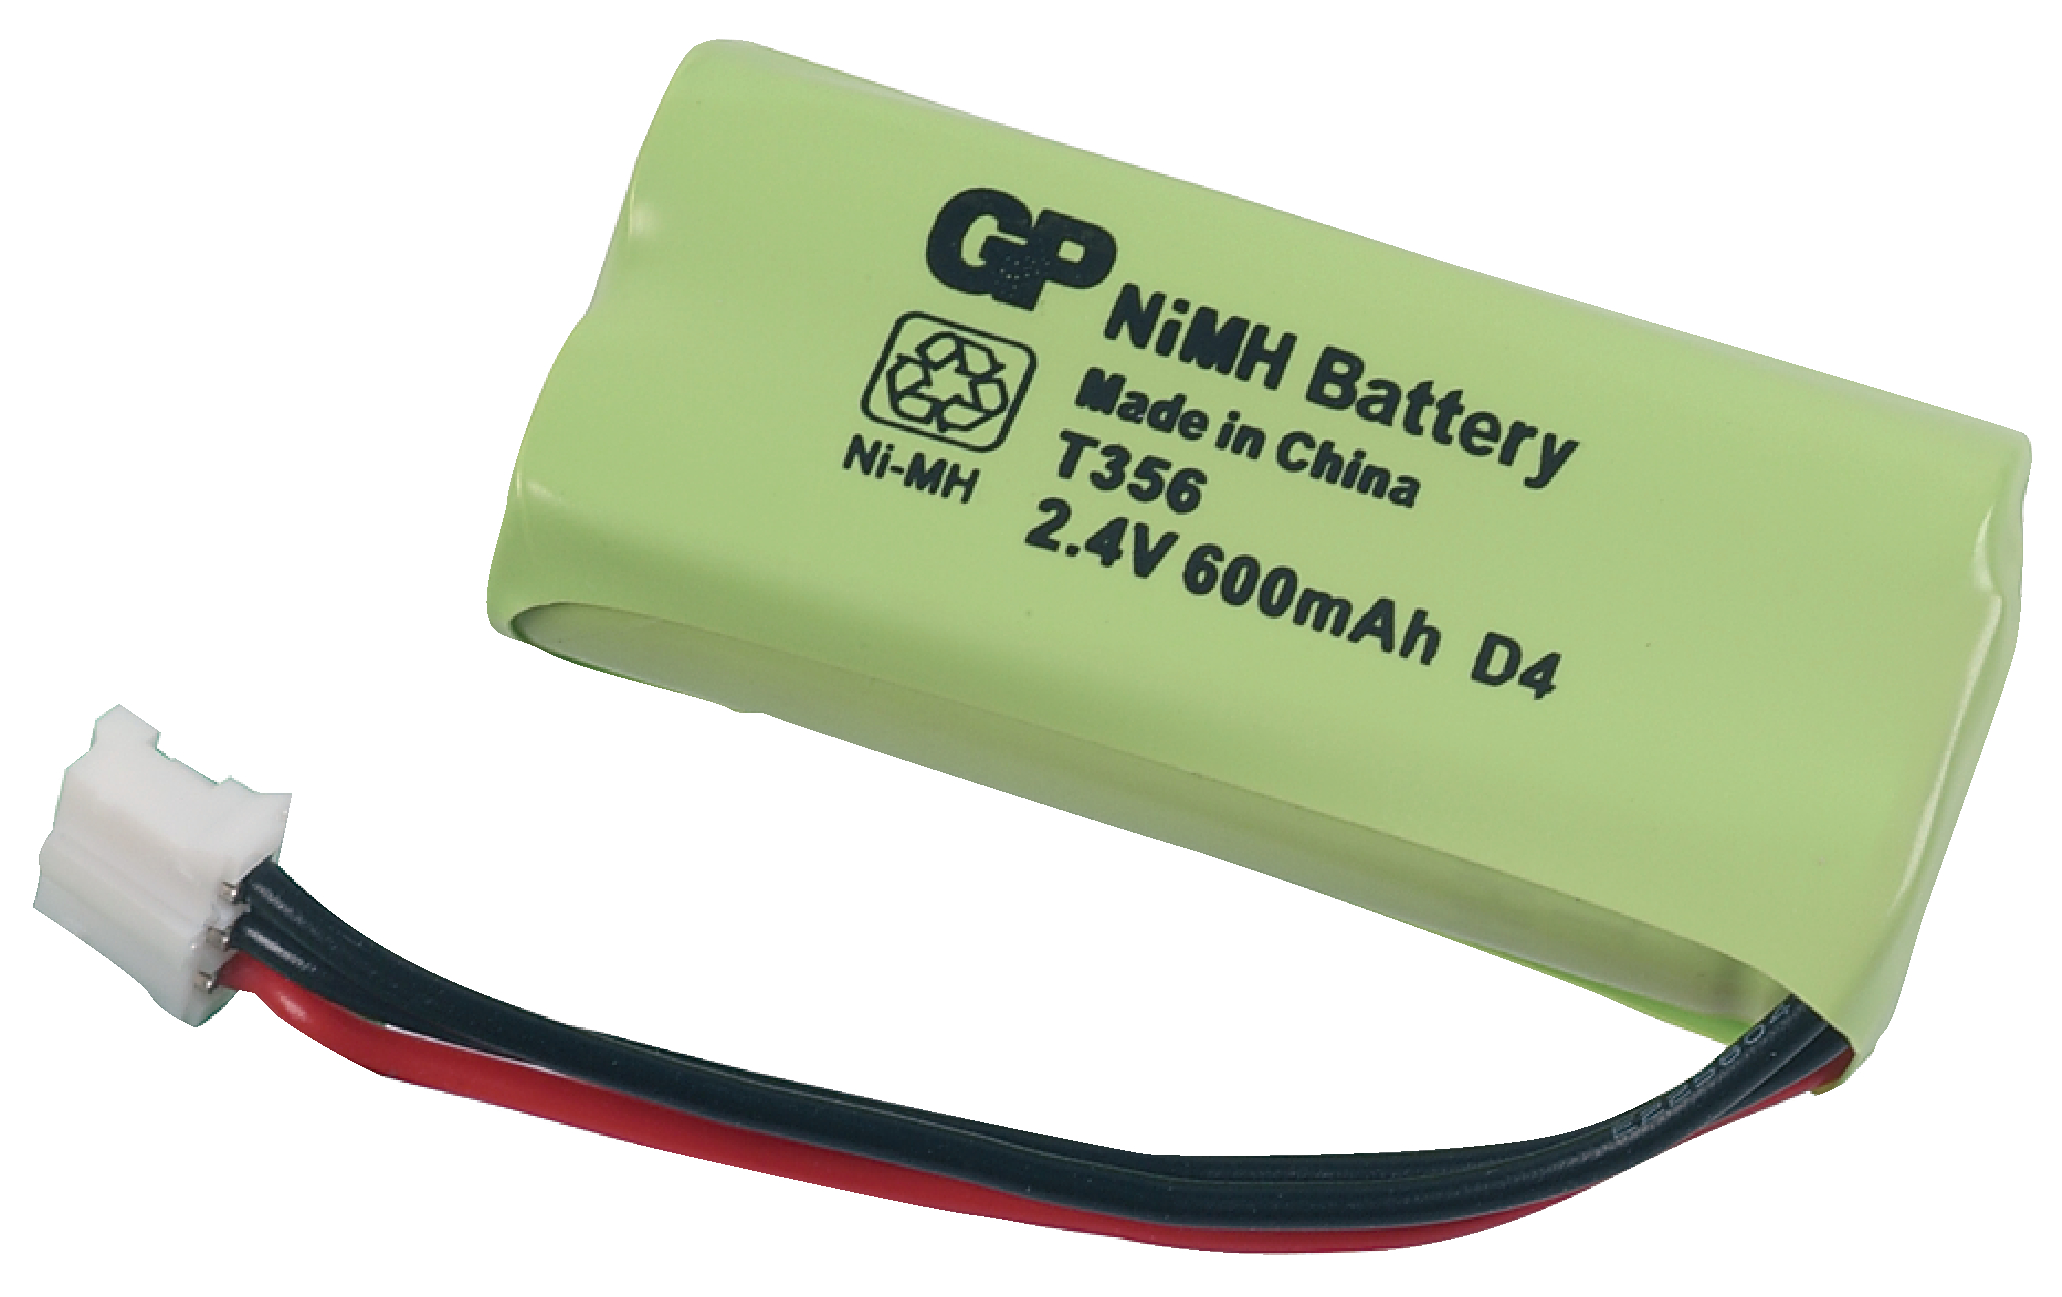 Battery t. 2.4V 600mah аккумулятор. Аккумулятор GP NIMH Battery для радиотелефона. Аккумулятор для радиотелефона 2.4 v. Аккумулятор t-356 2.4v 800mah Robiton.